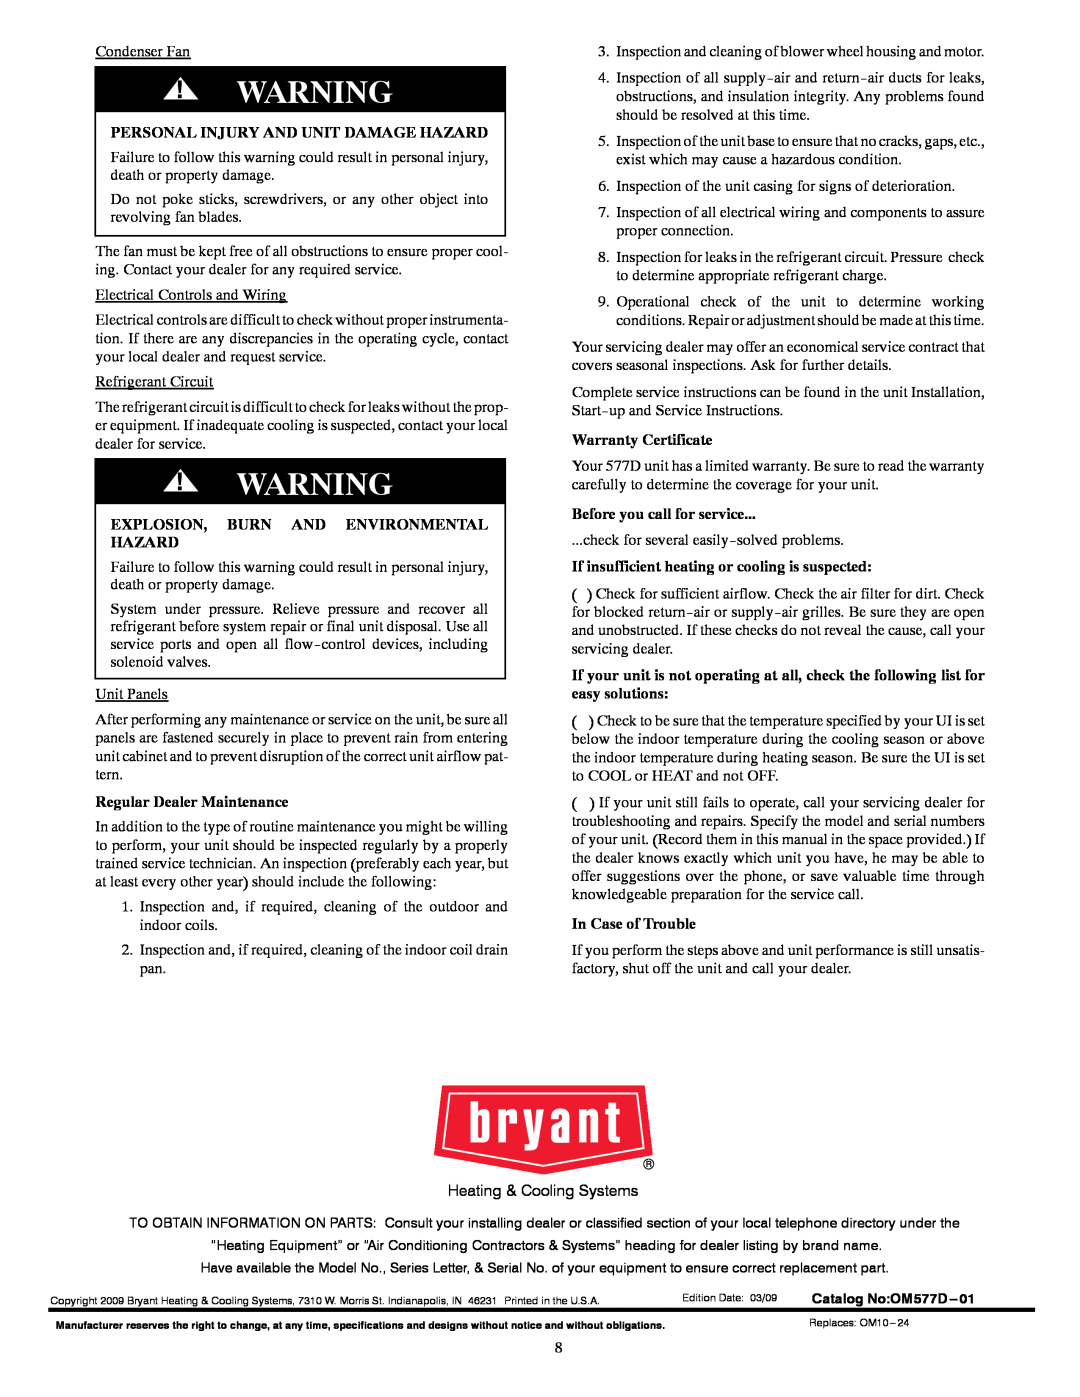 Bryant 577D Personal Injury And Unit Damage Hazard, Explosion, Burn And Environmental Hazard, Regular Dealer Maintenance 